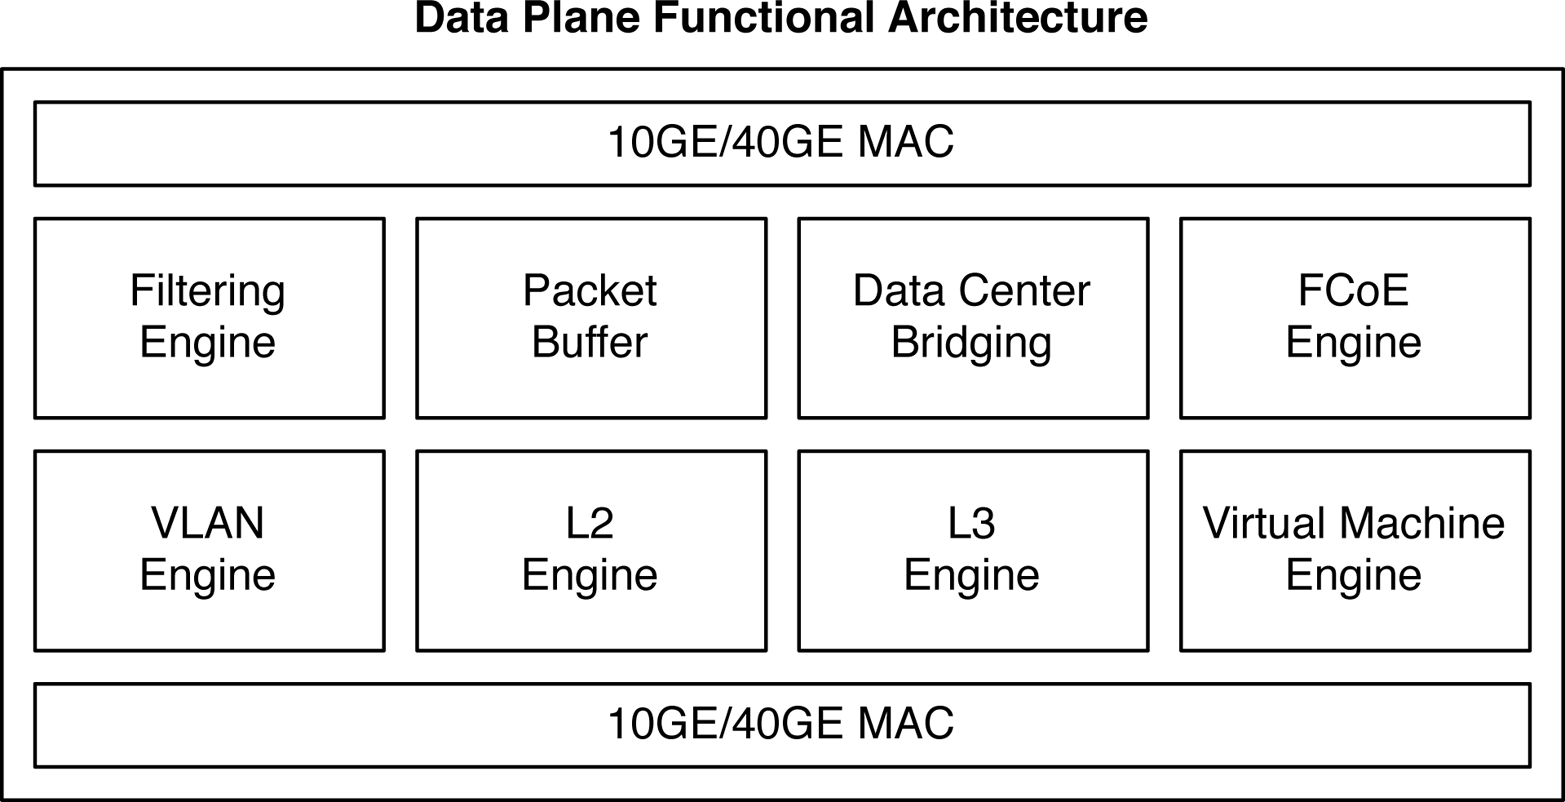 Data plane functional architecture